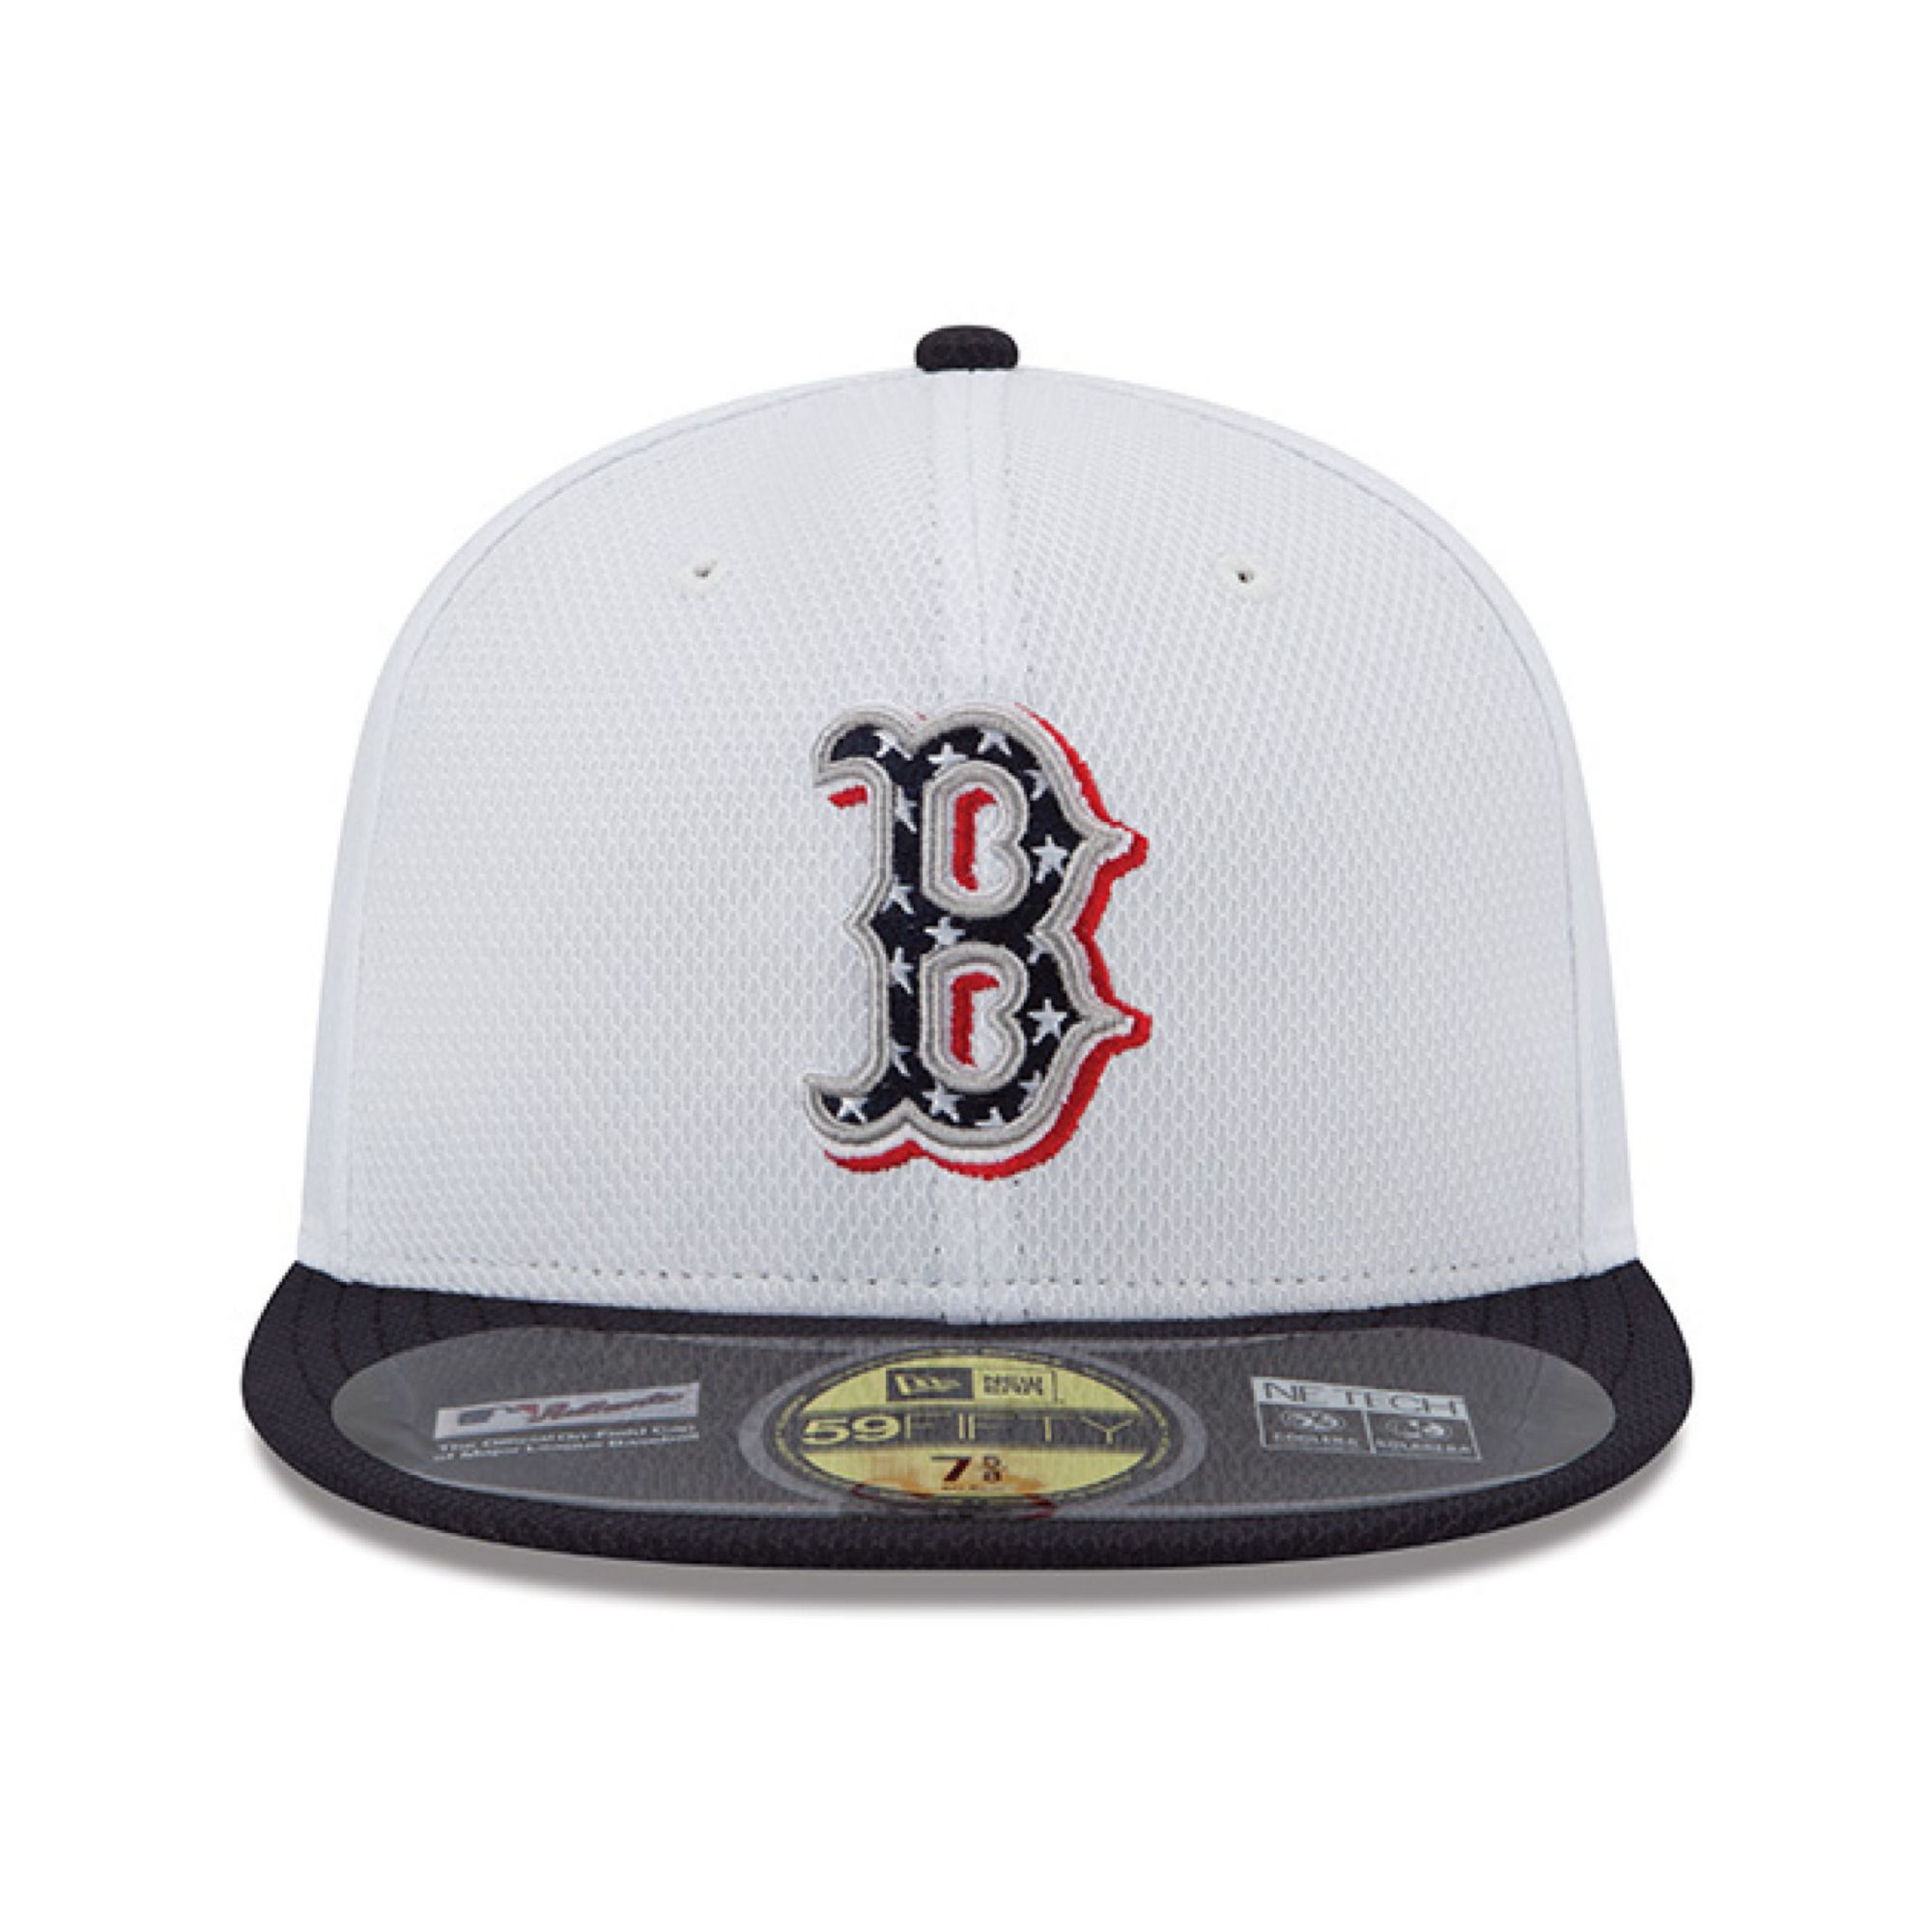 KTZ Boston Red Sox Mlb July 4th Stars Stripes 59fifty Cap in White/Navy